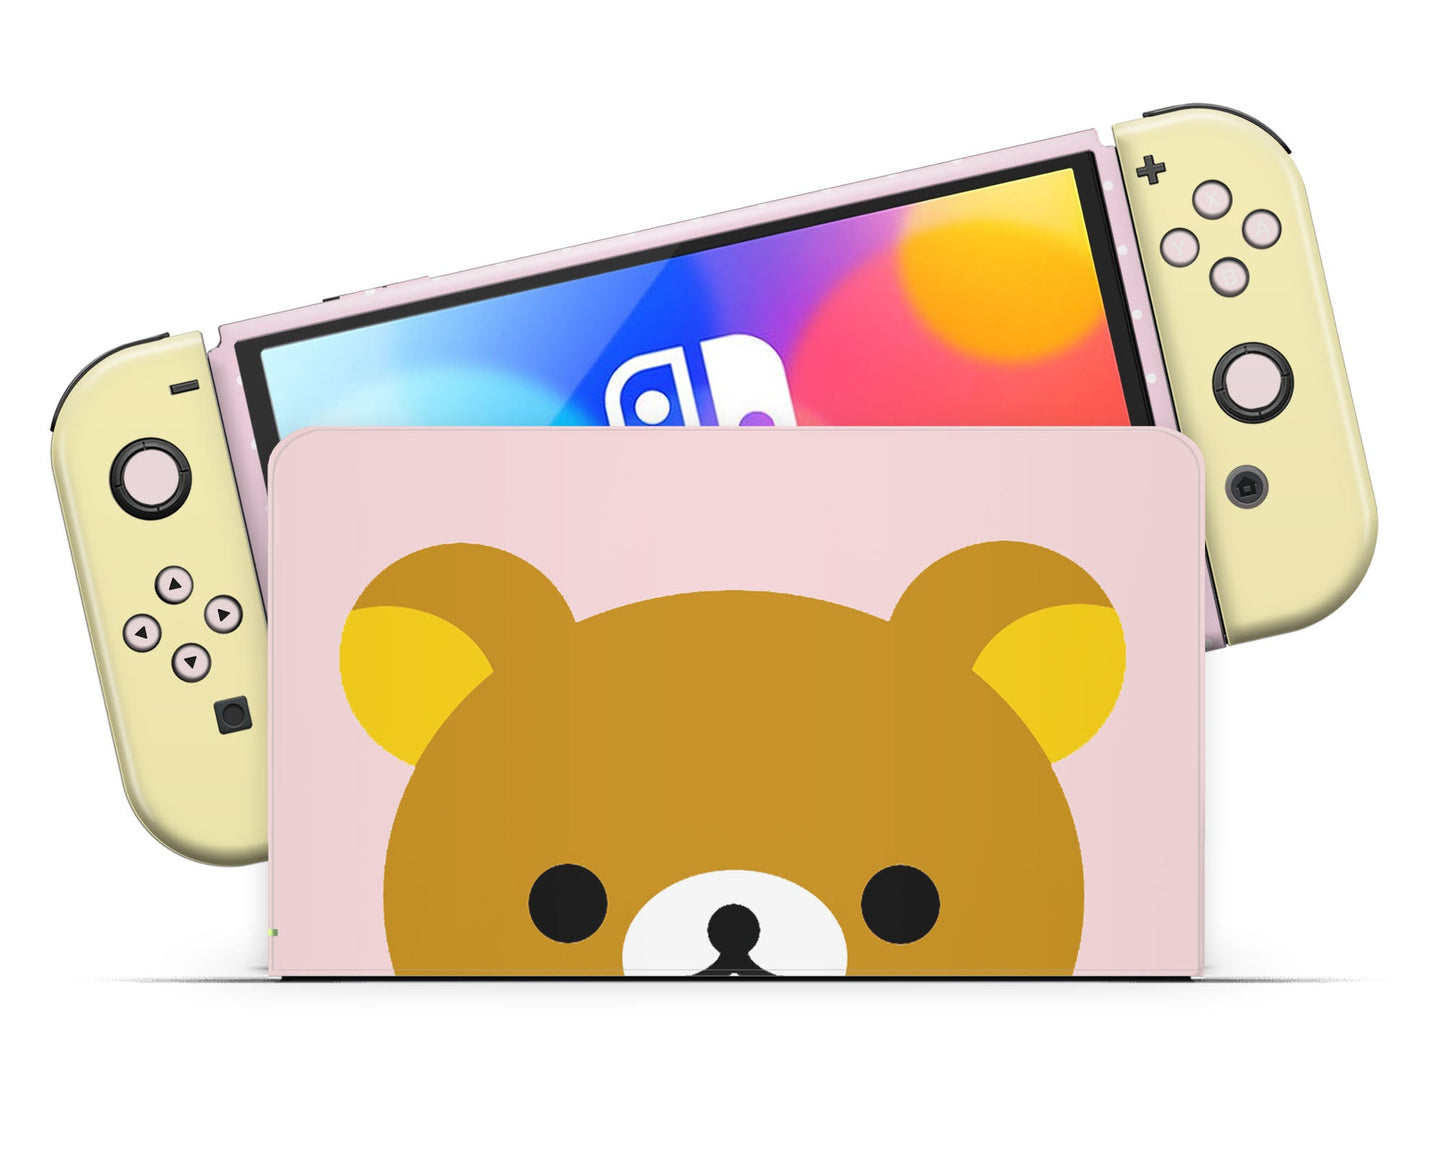 Lux Skins Nintendo Switch OLED Rilakkuma Cute Pastel Pink Full Set Skins - Pop culture Rilakkuma Skin